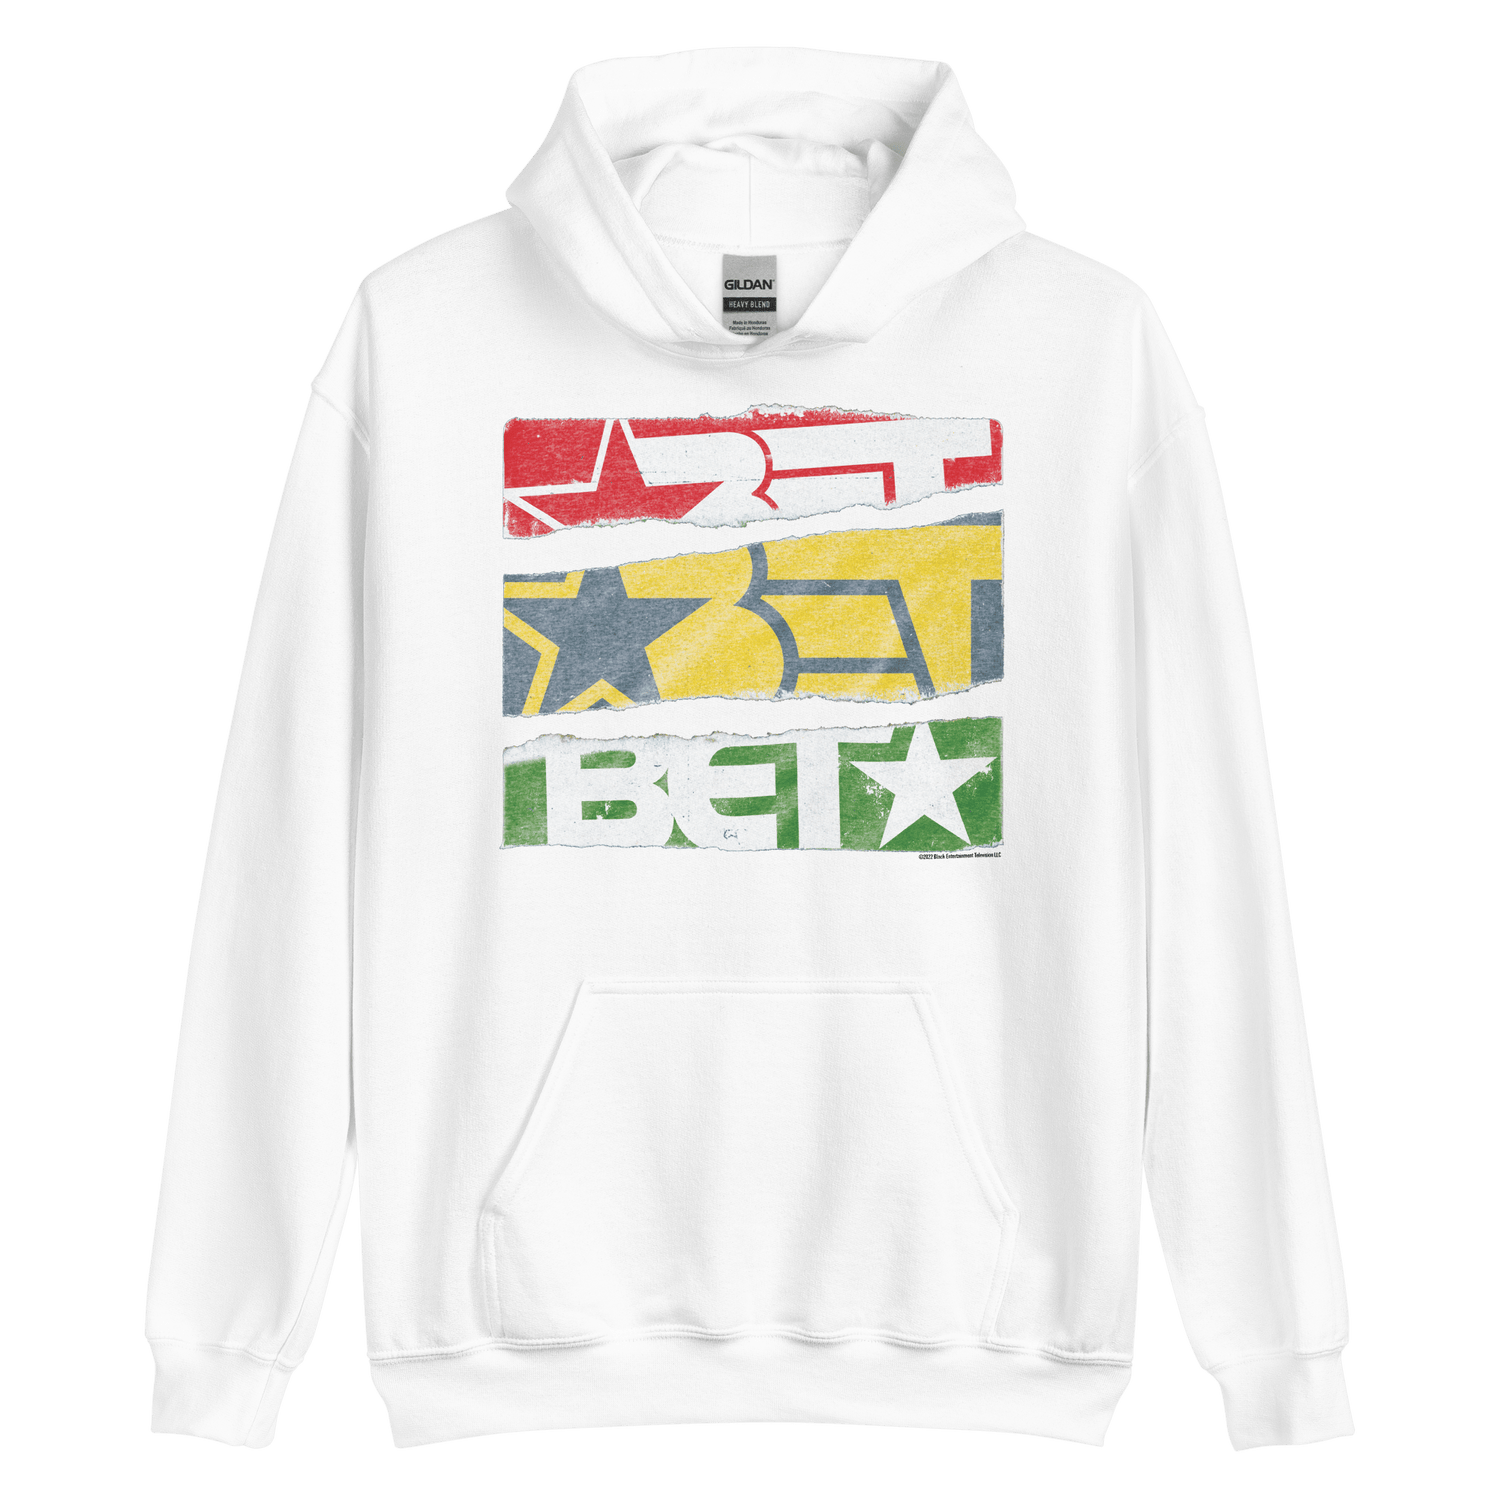 BET Retro Logo Hooded Sweatshirt - Paramount Shop